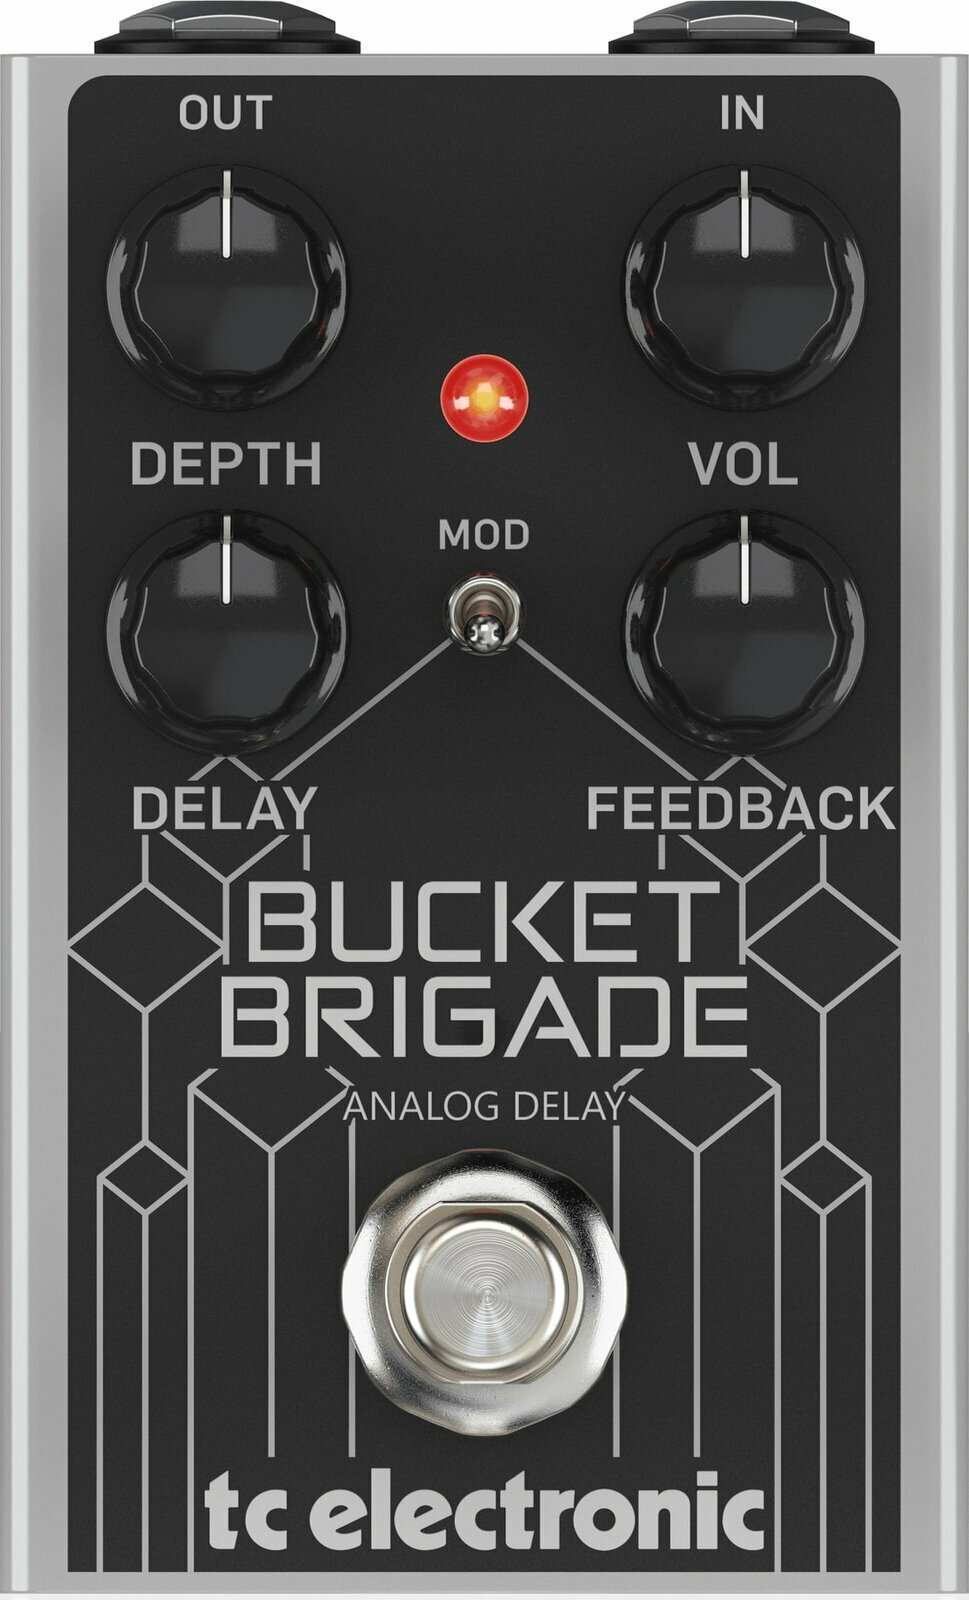 Guitar Effect TC Electronic Bucket Brigade